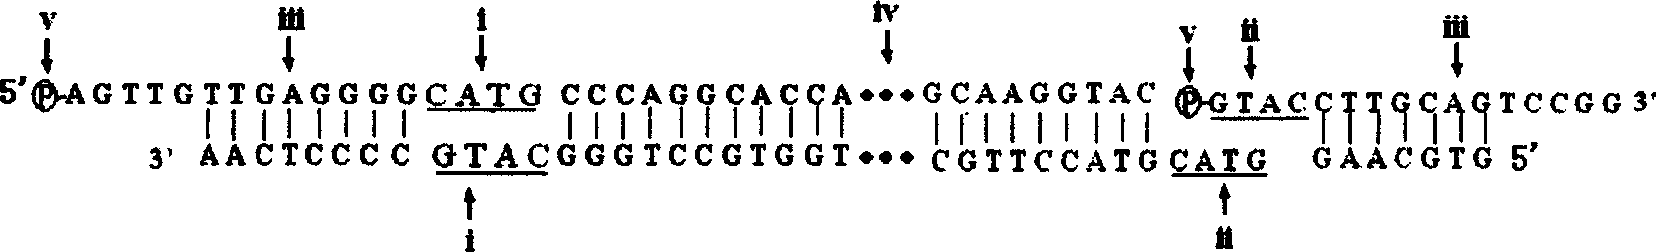 Multi-copy monomolecular nucleic acid array chip